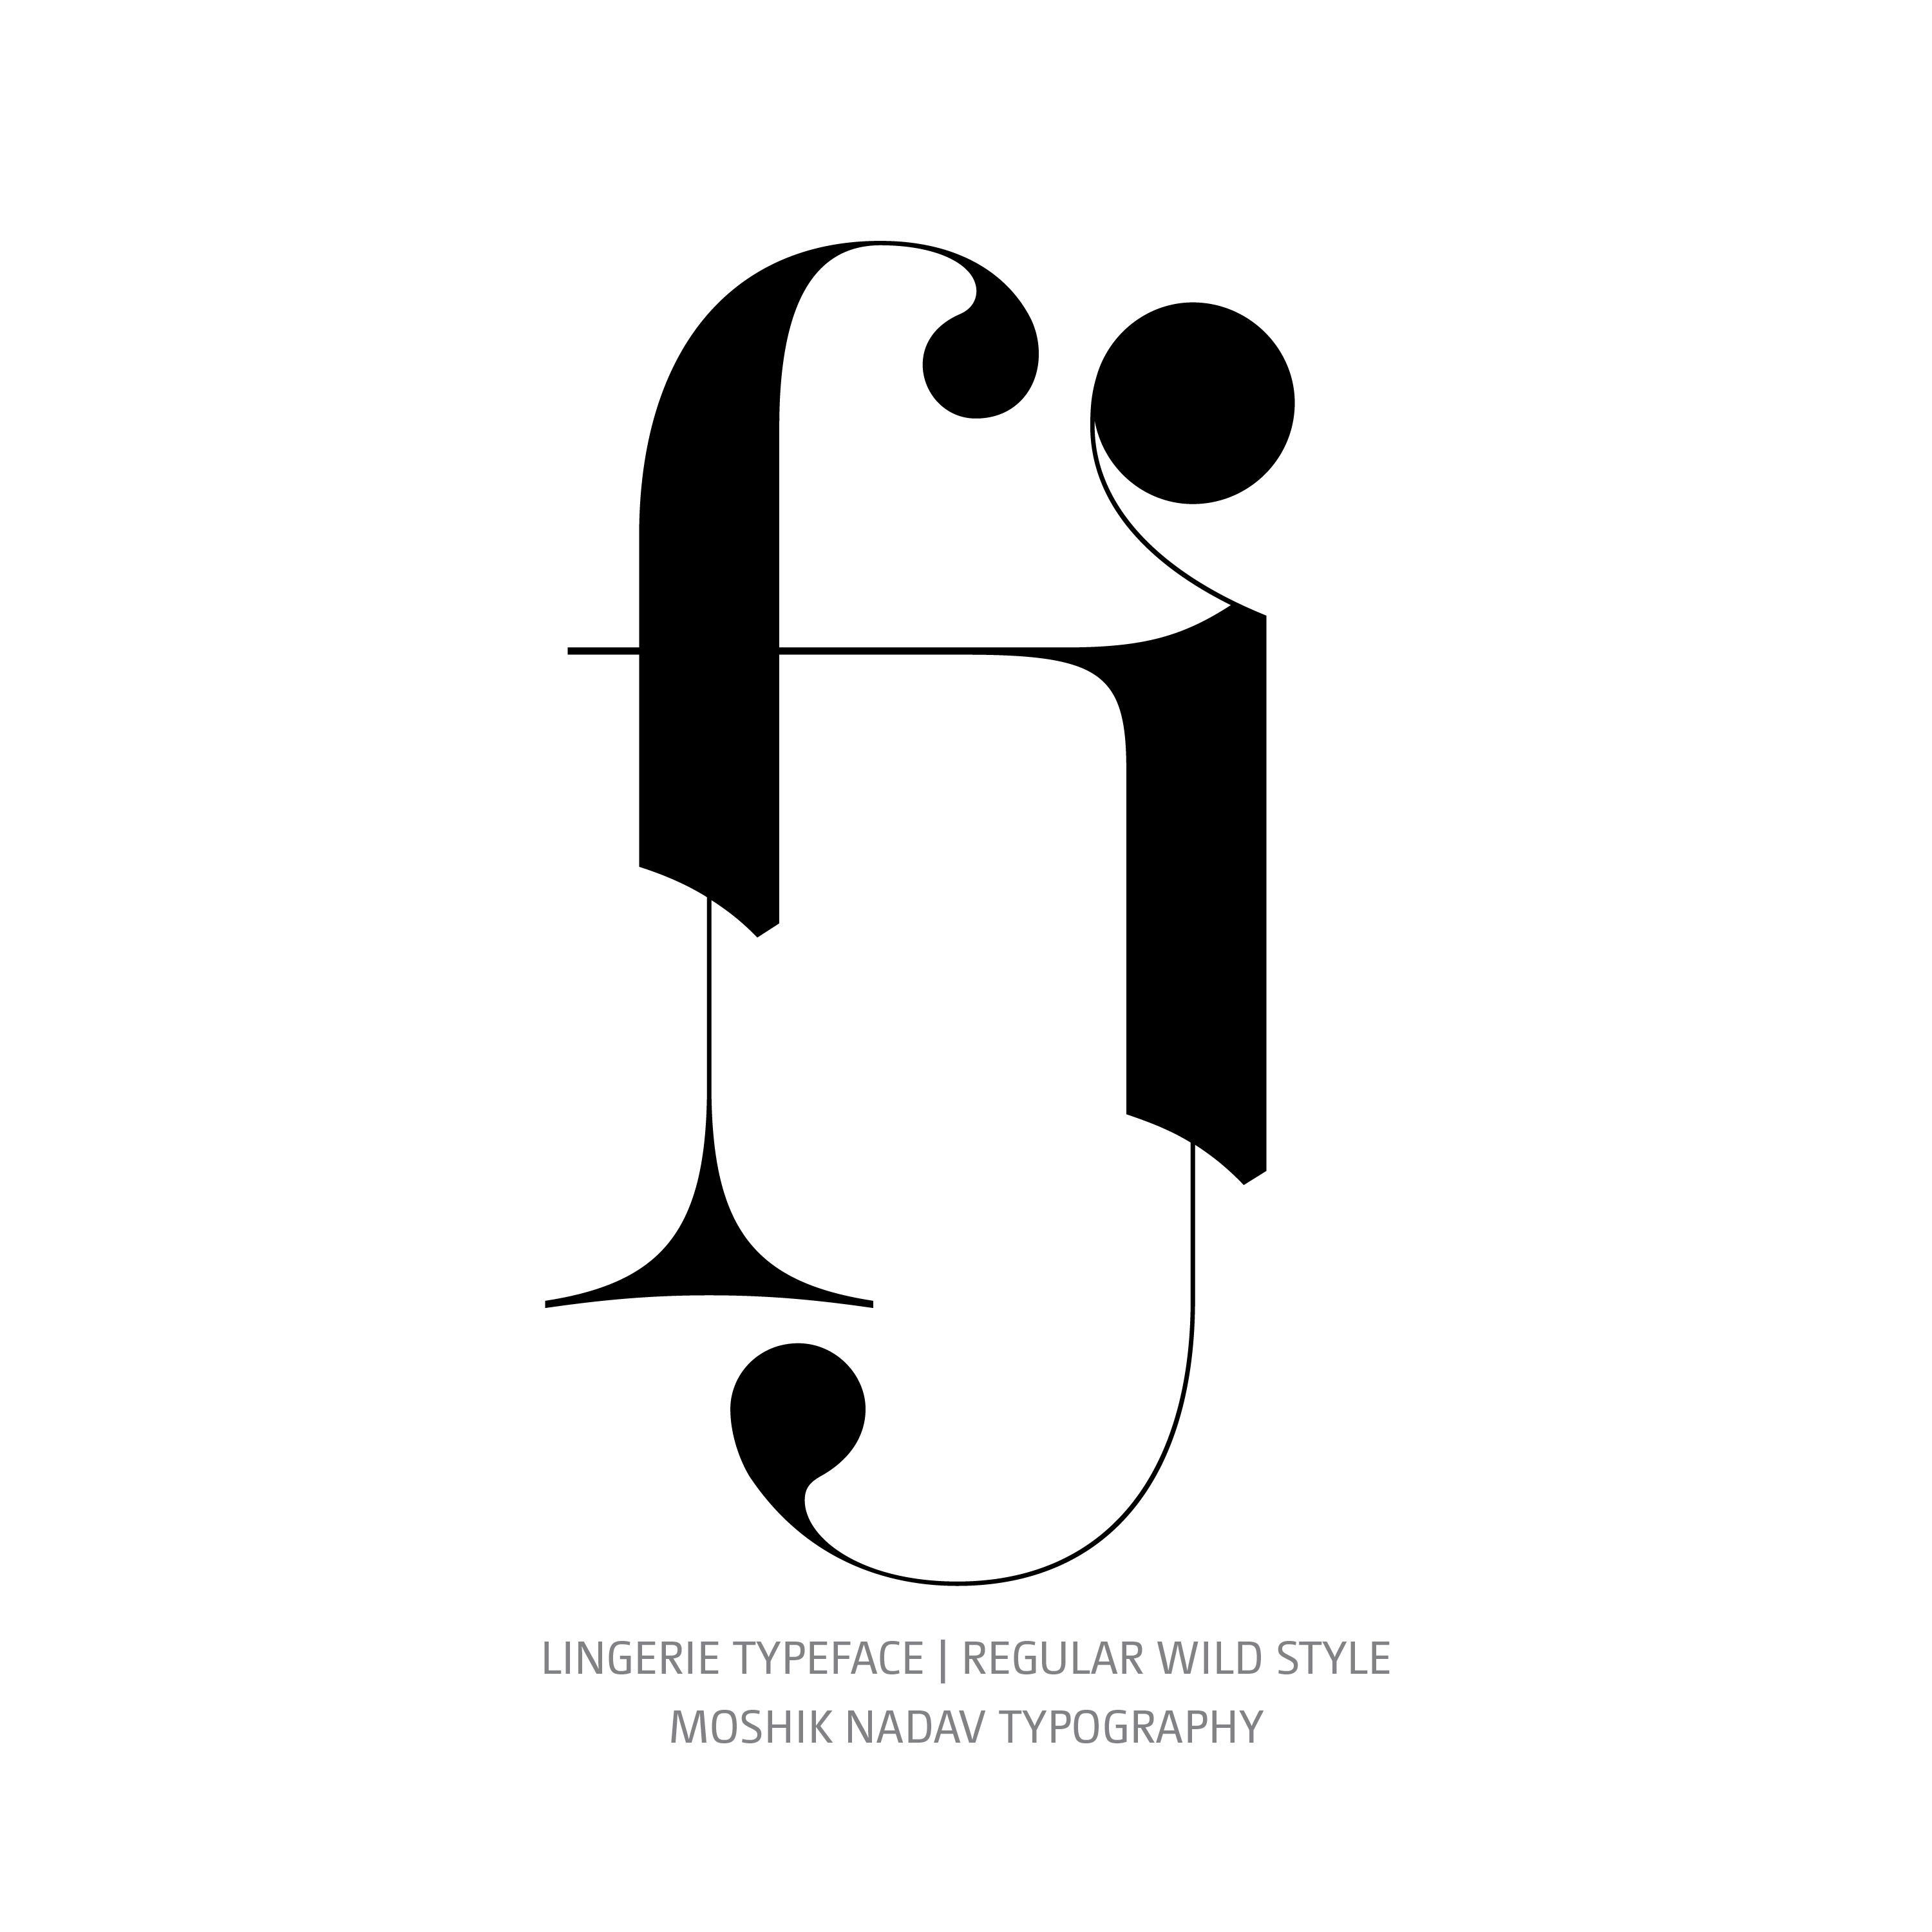 Lingerie Typeface Regular Wild fj ligature